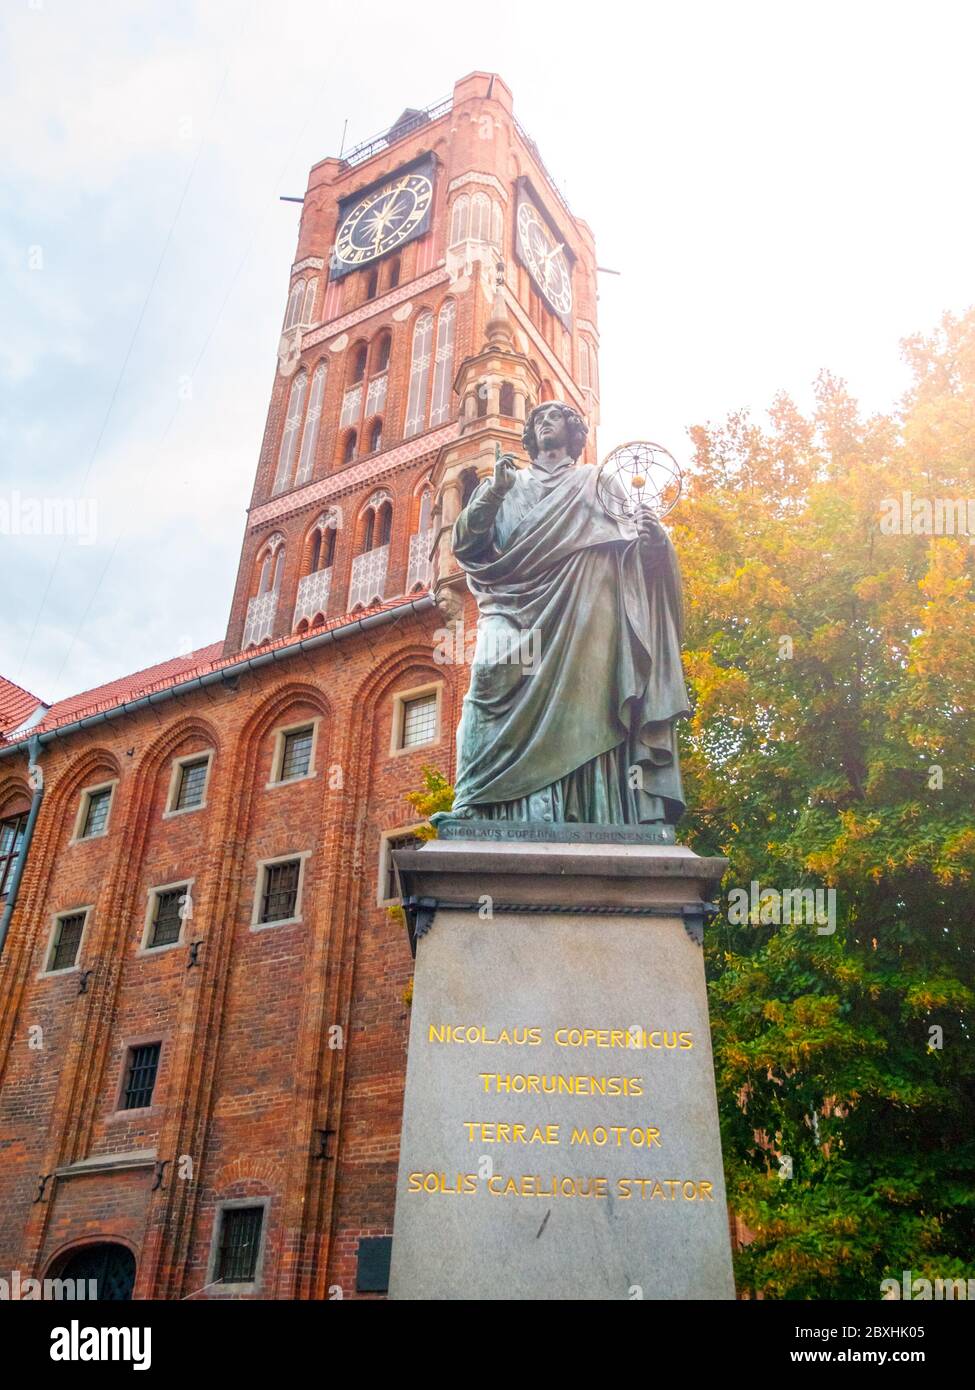 TORUN, POLAND - AUGUST 27, 2014: Statue of Nicolaus Copernicus, Renaissance mathematician and astronomer, in Torun Poland Stock Photo